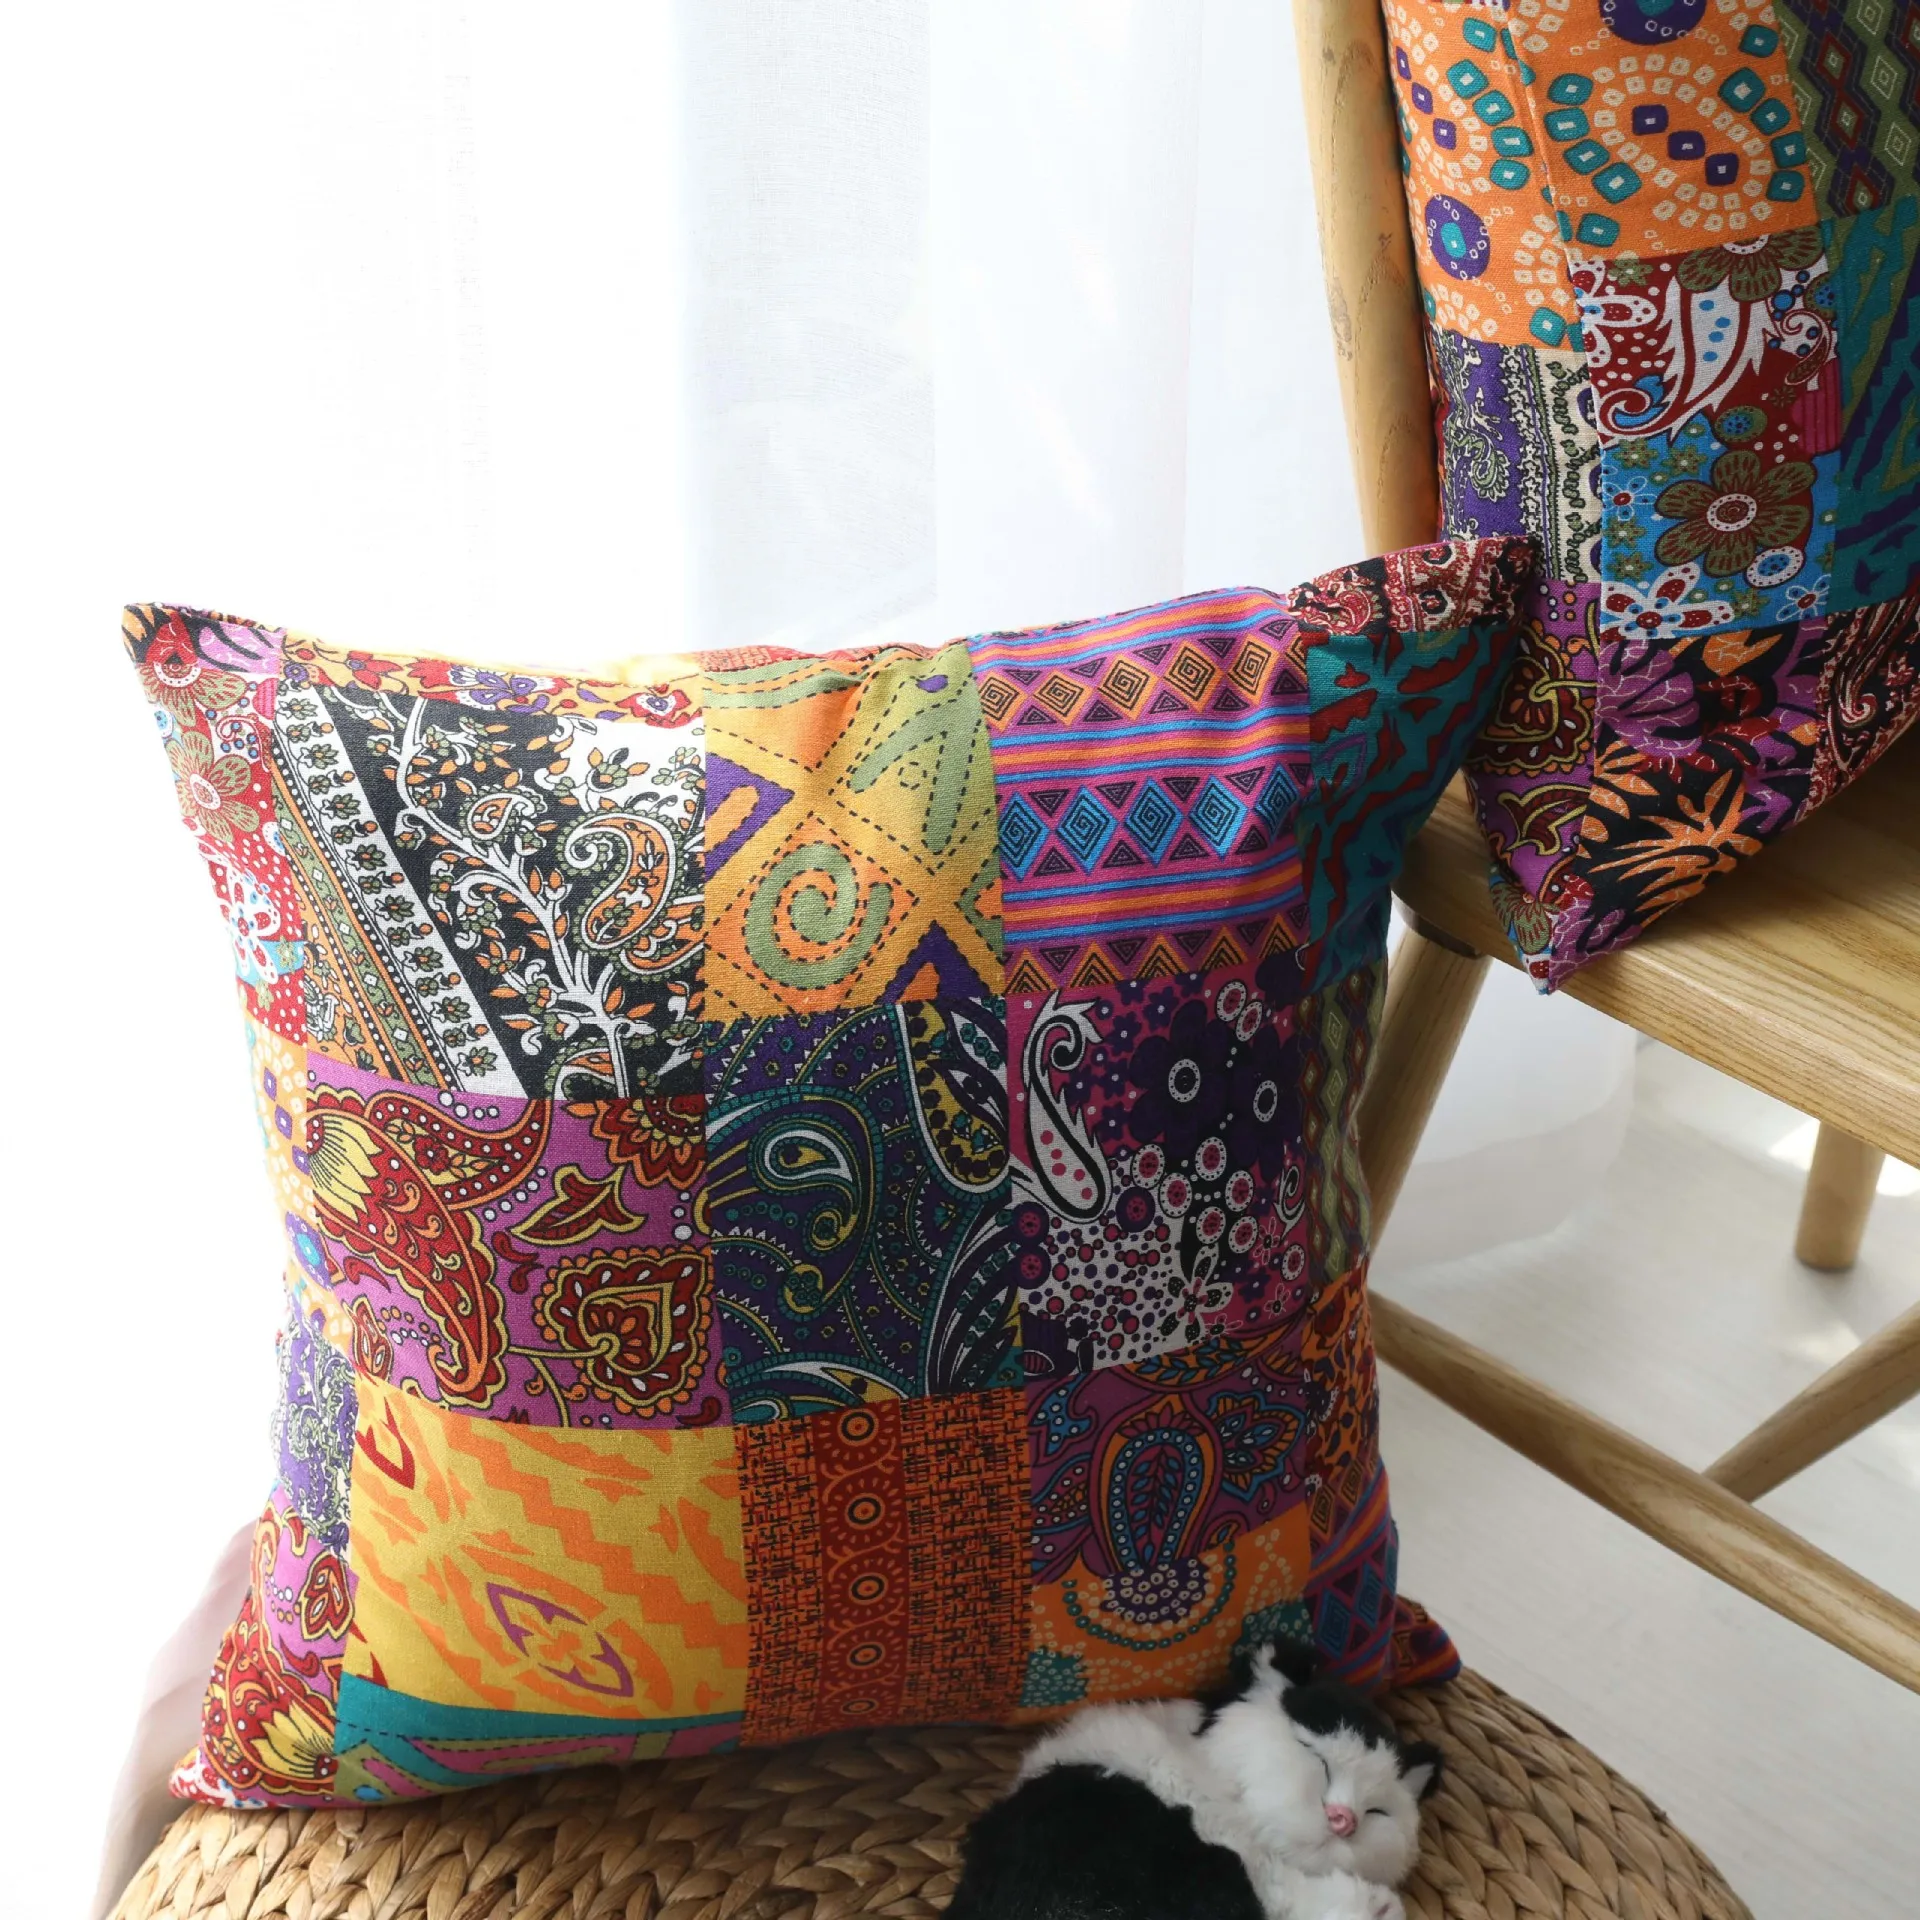 

60x60cm Mandala Floral Decorative Pillow Covers Bohemian Boho Cotton Linen Retro Indian Ethnic Cushion Pillowcase Throw Cover